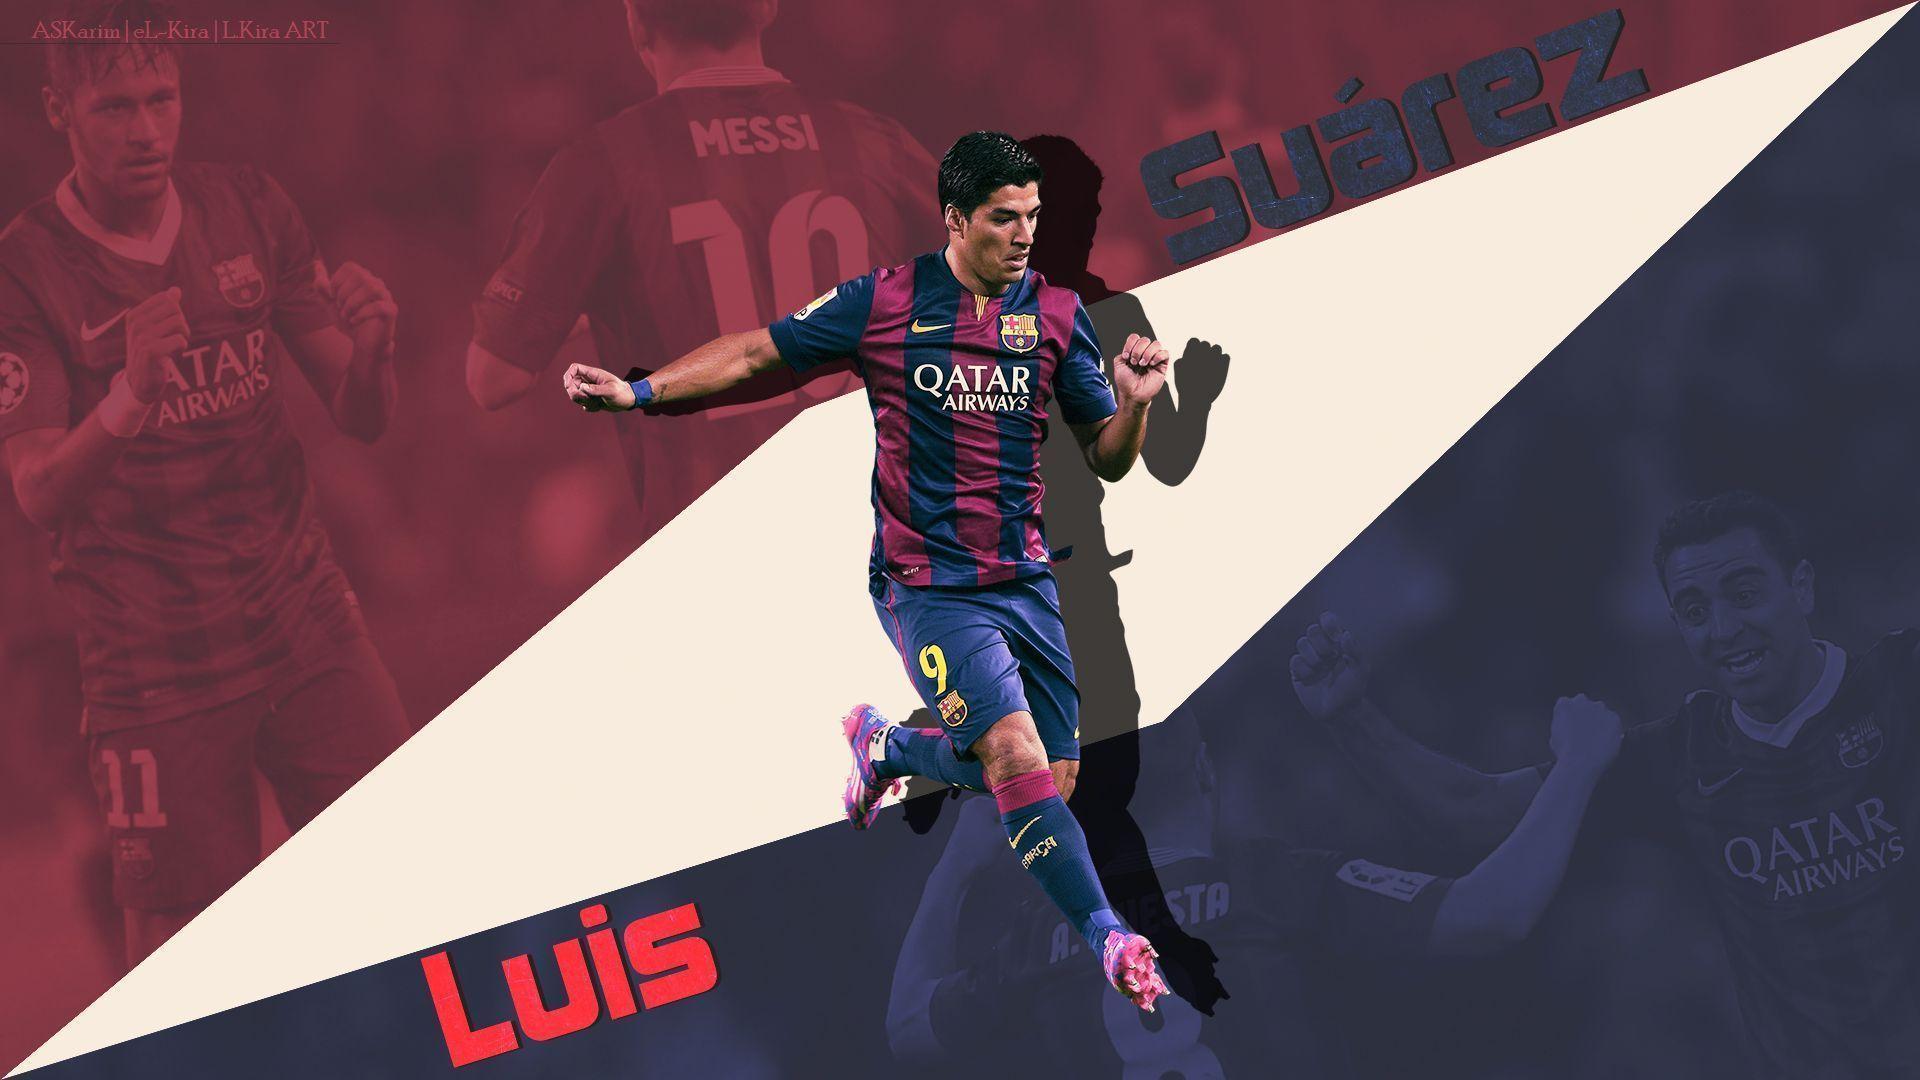 Luis Suarez 2015 FC Barcelona Wallpaper Wide or HD. Male